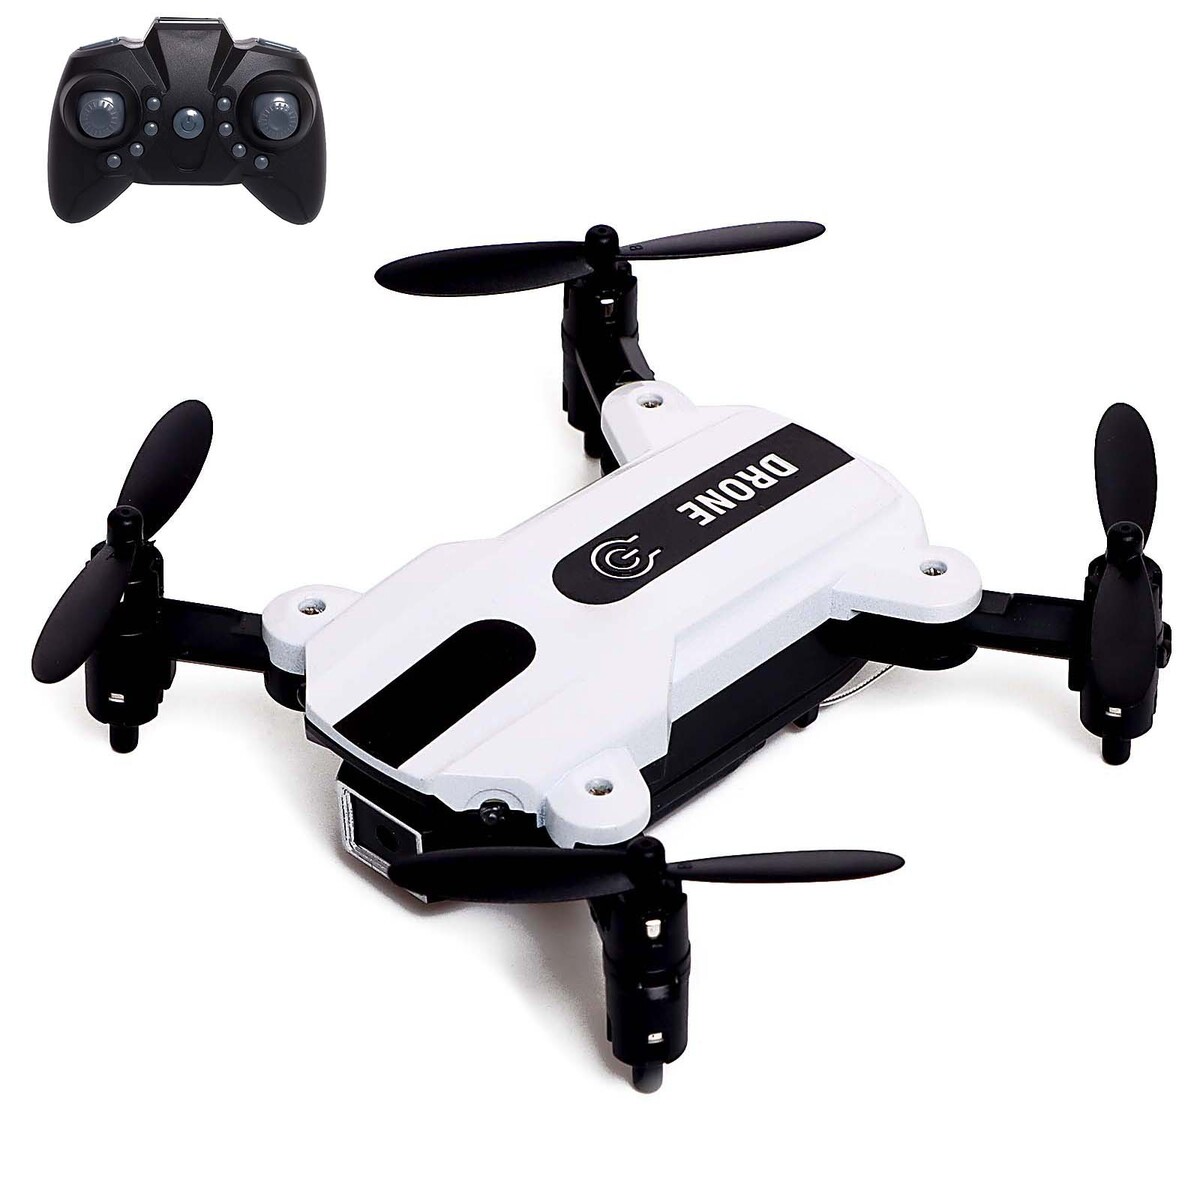 Квадрокоптер flash drone, камера 480p, wi-fi, с сумкой, цвет белый радиоуправляемый квадрокоптер mjx bugs 7 4k v2 rtf 2 4g с сумкой mjx b7 v2 bag коптер